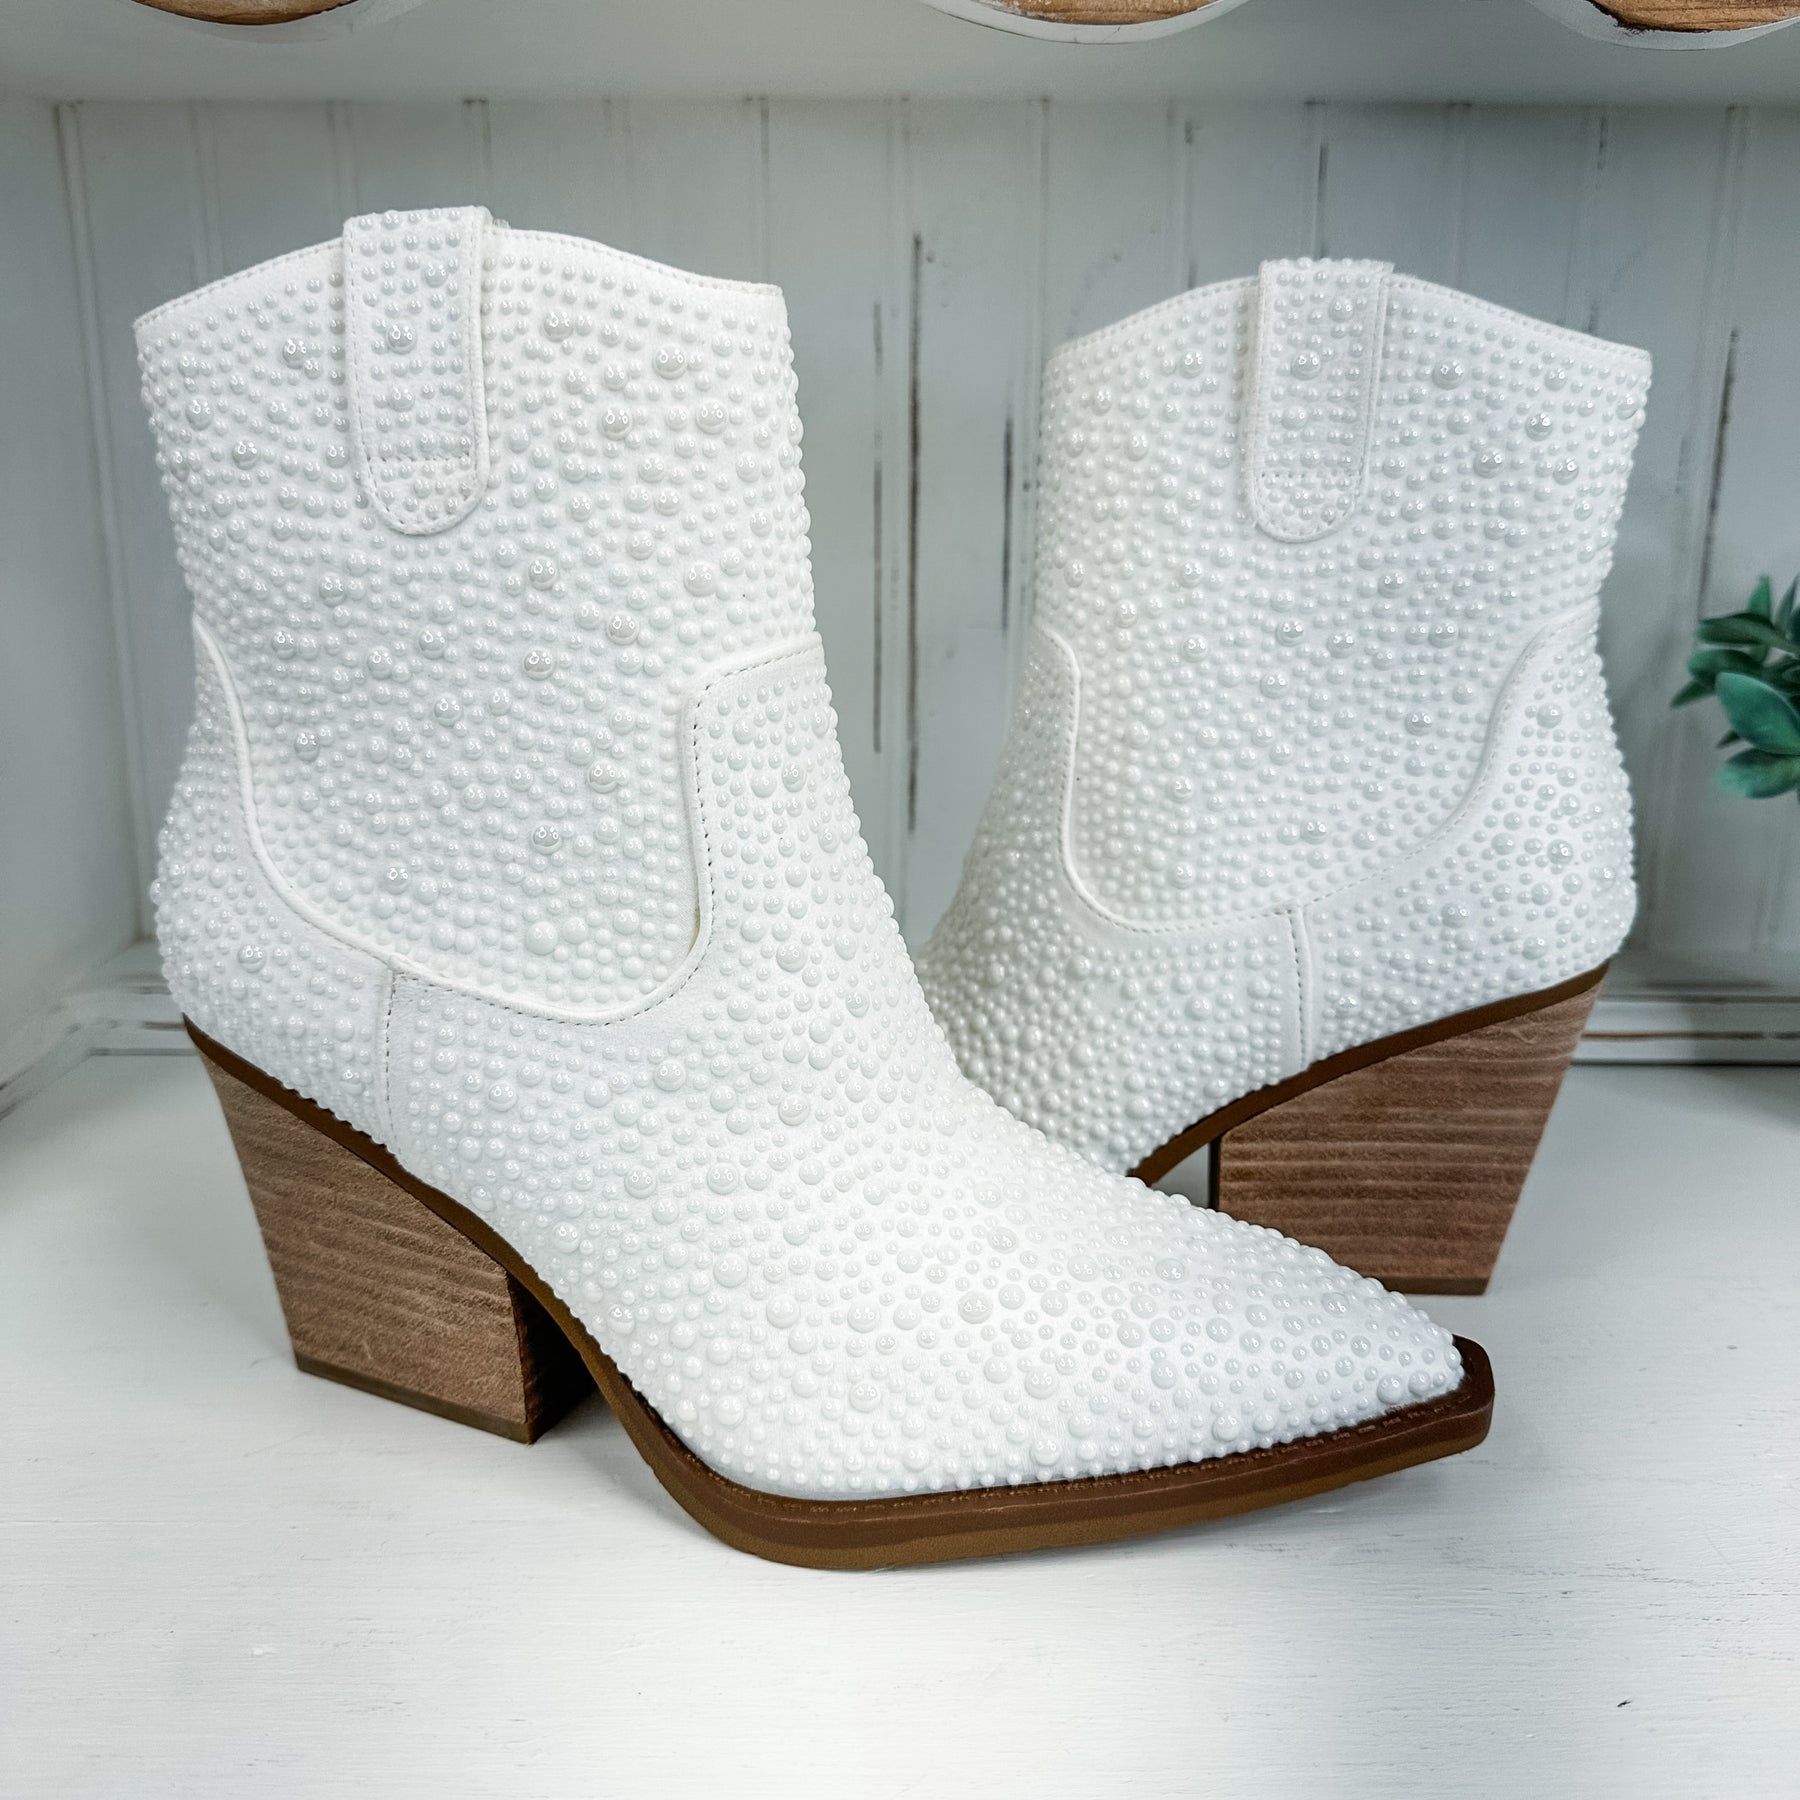 Kady Pearl Boot - White